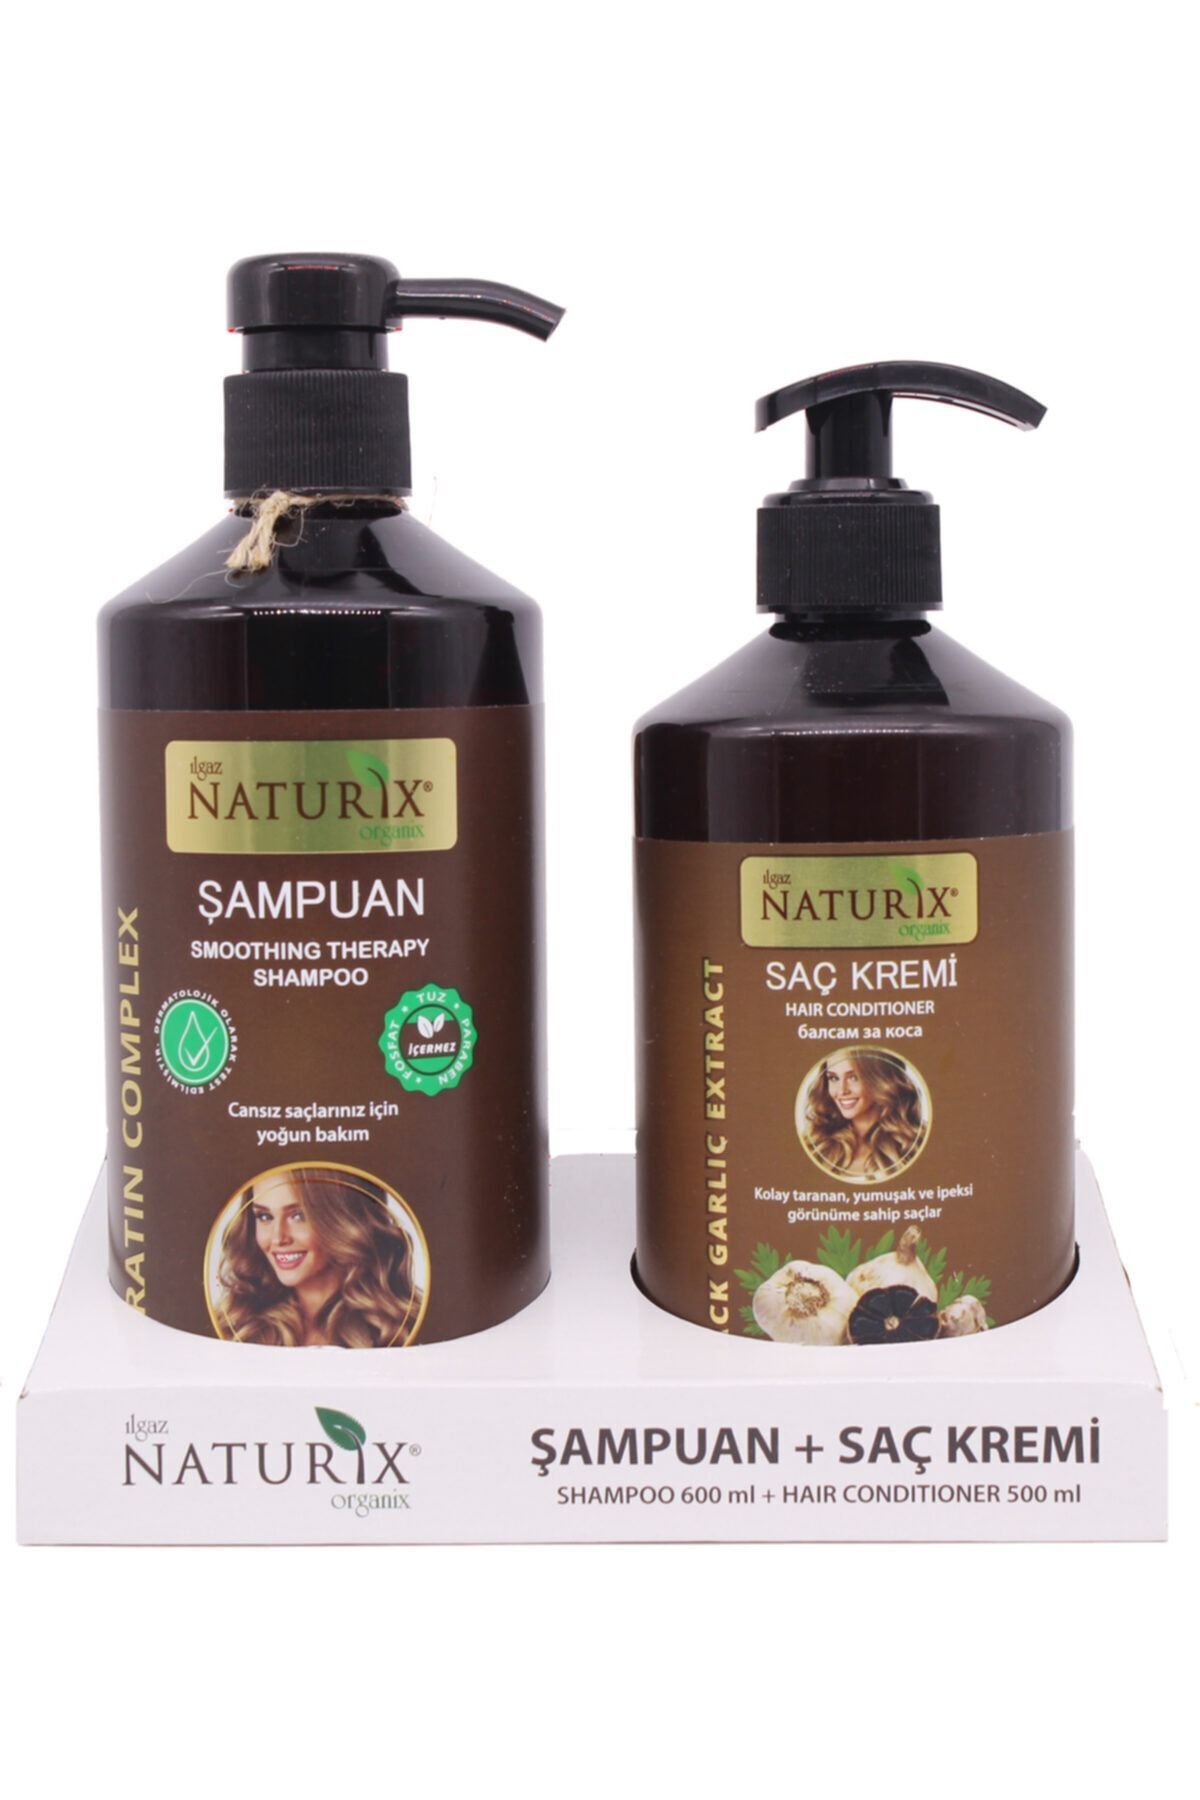 Ilgaz Naturix Organix 2'li 600 Ml Doğal Keratin Bakım Şampuan Natural Şampuan 500 Ml Siyah Sarımsak Saç Kremi